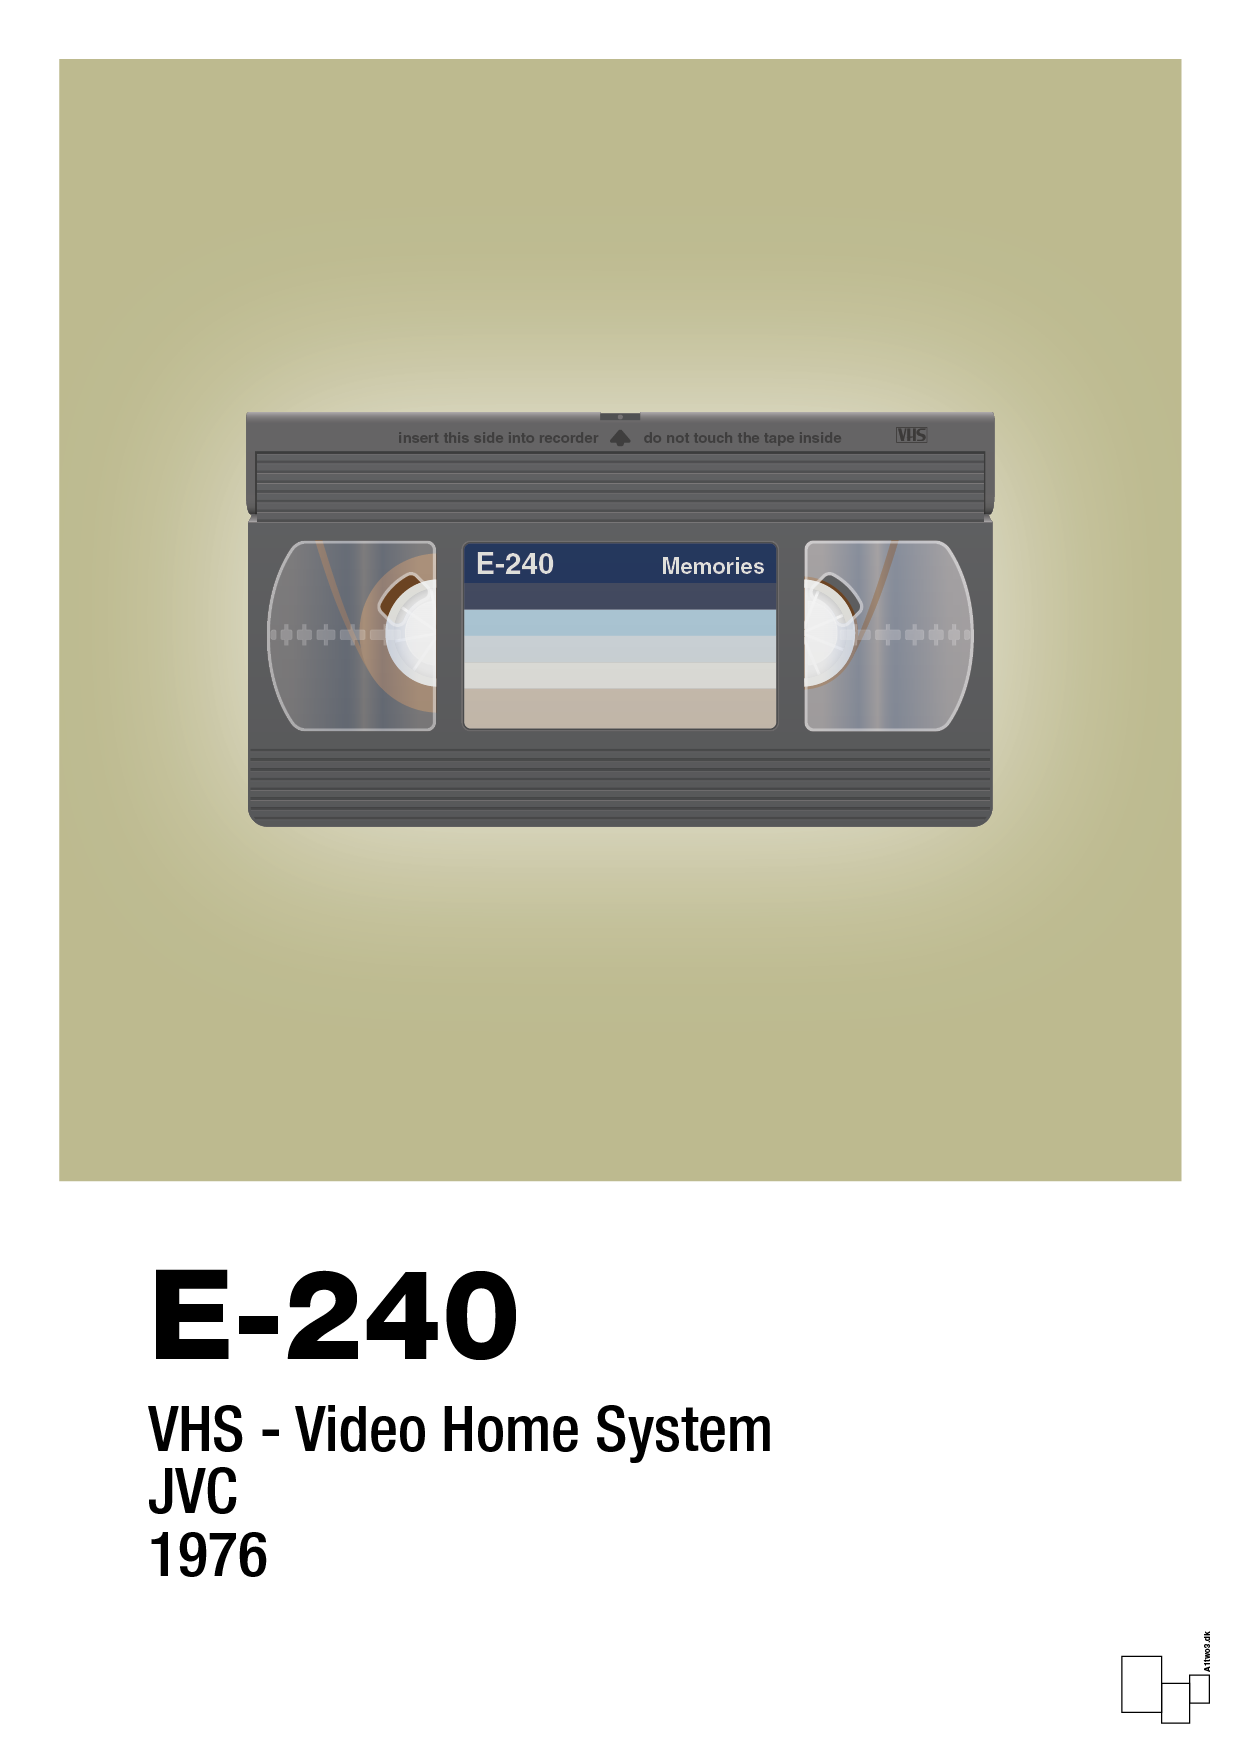 videobånd e-240 - Plakat med Grafik i Back to Nature